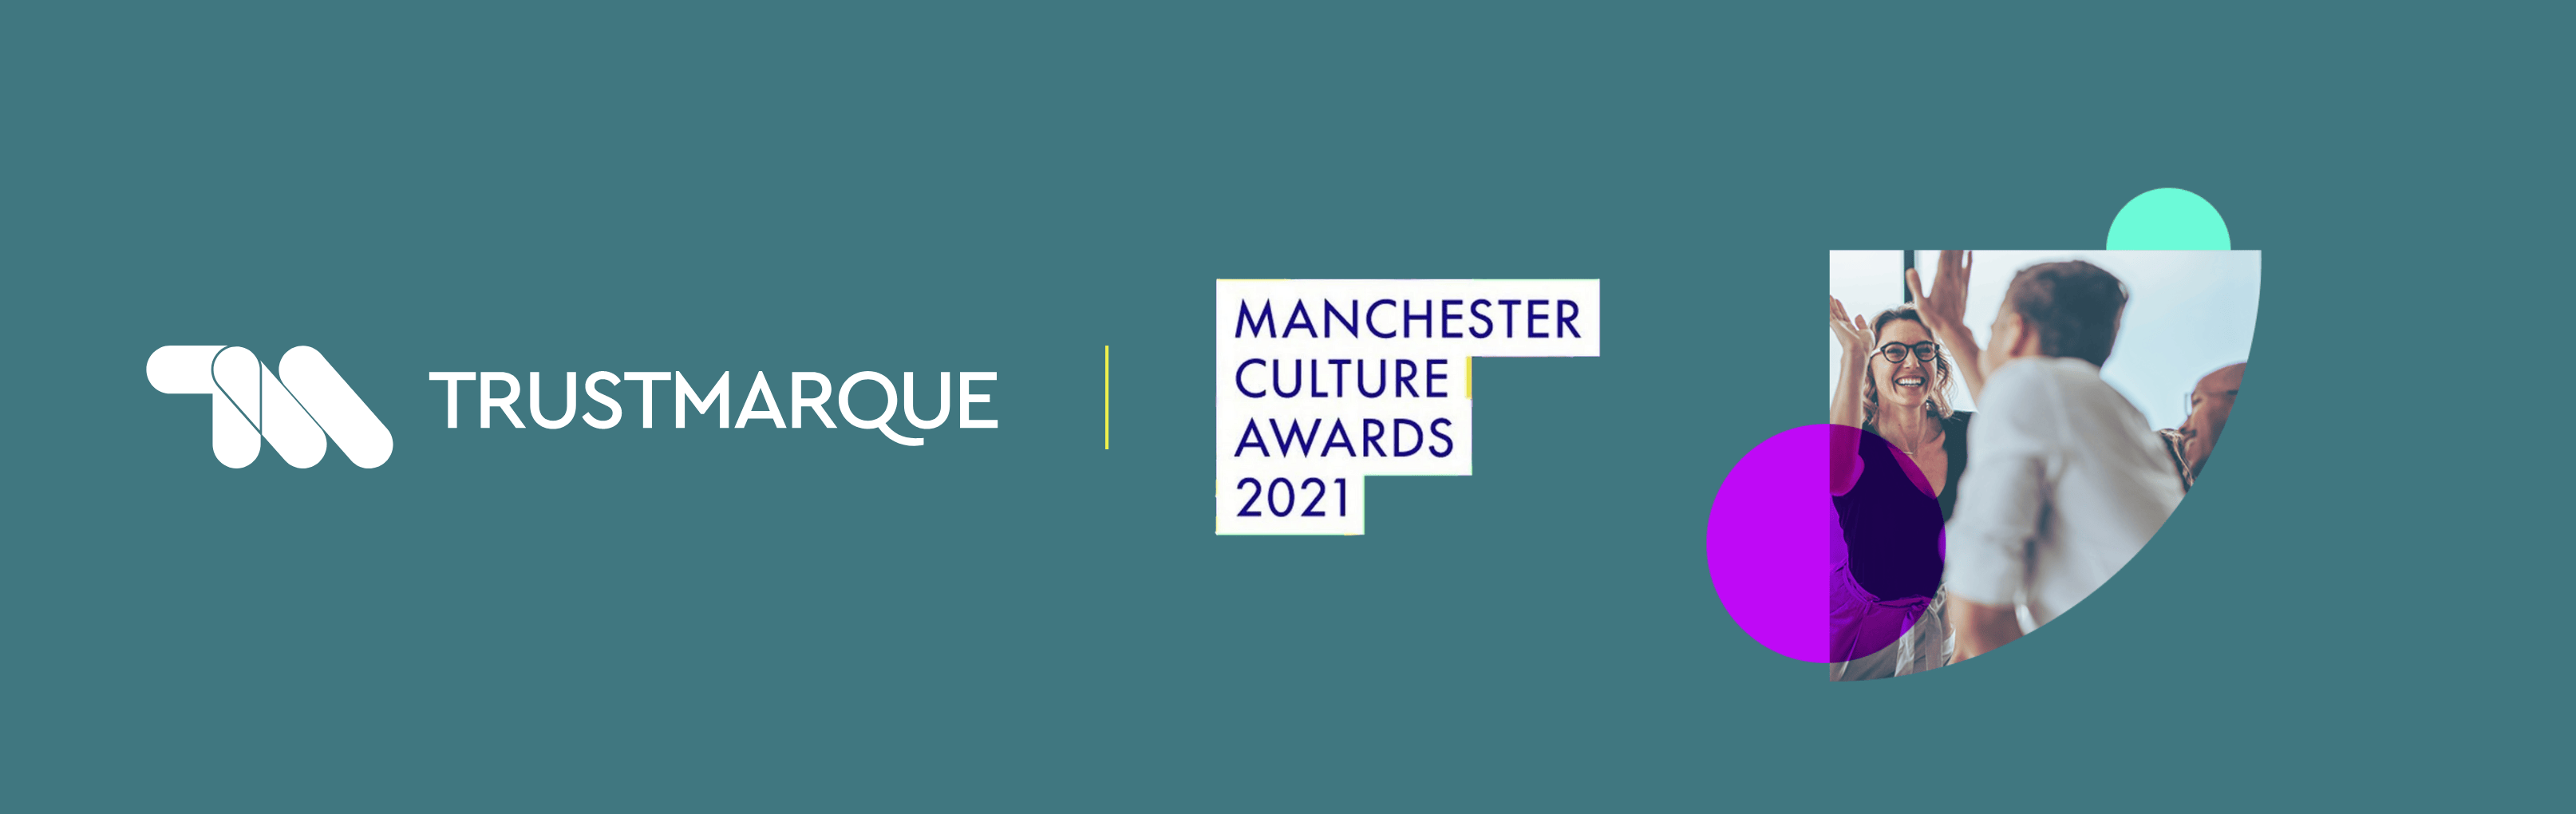 Manchester Culture Awards Banner